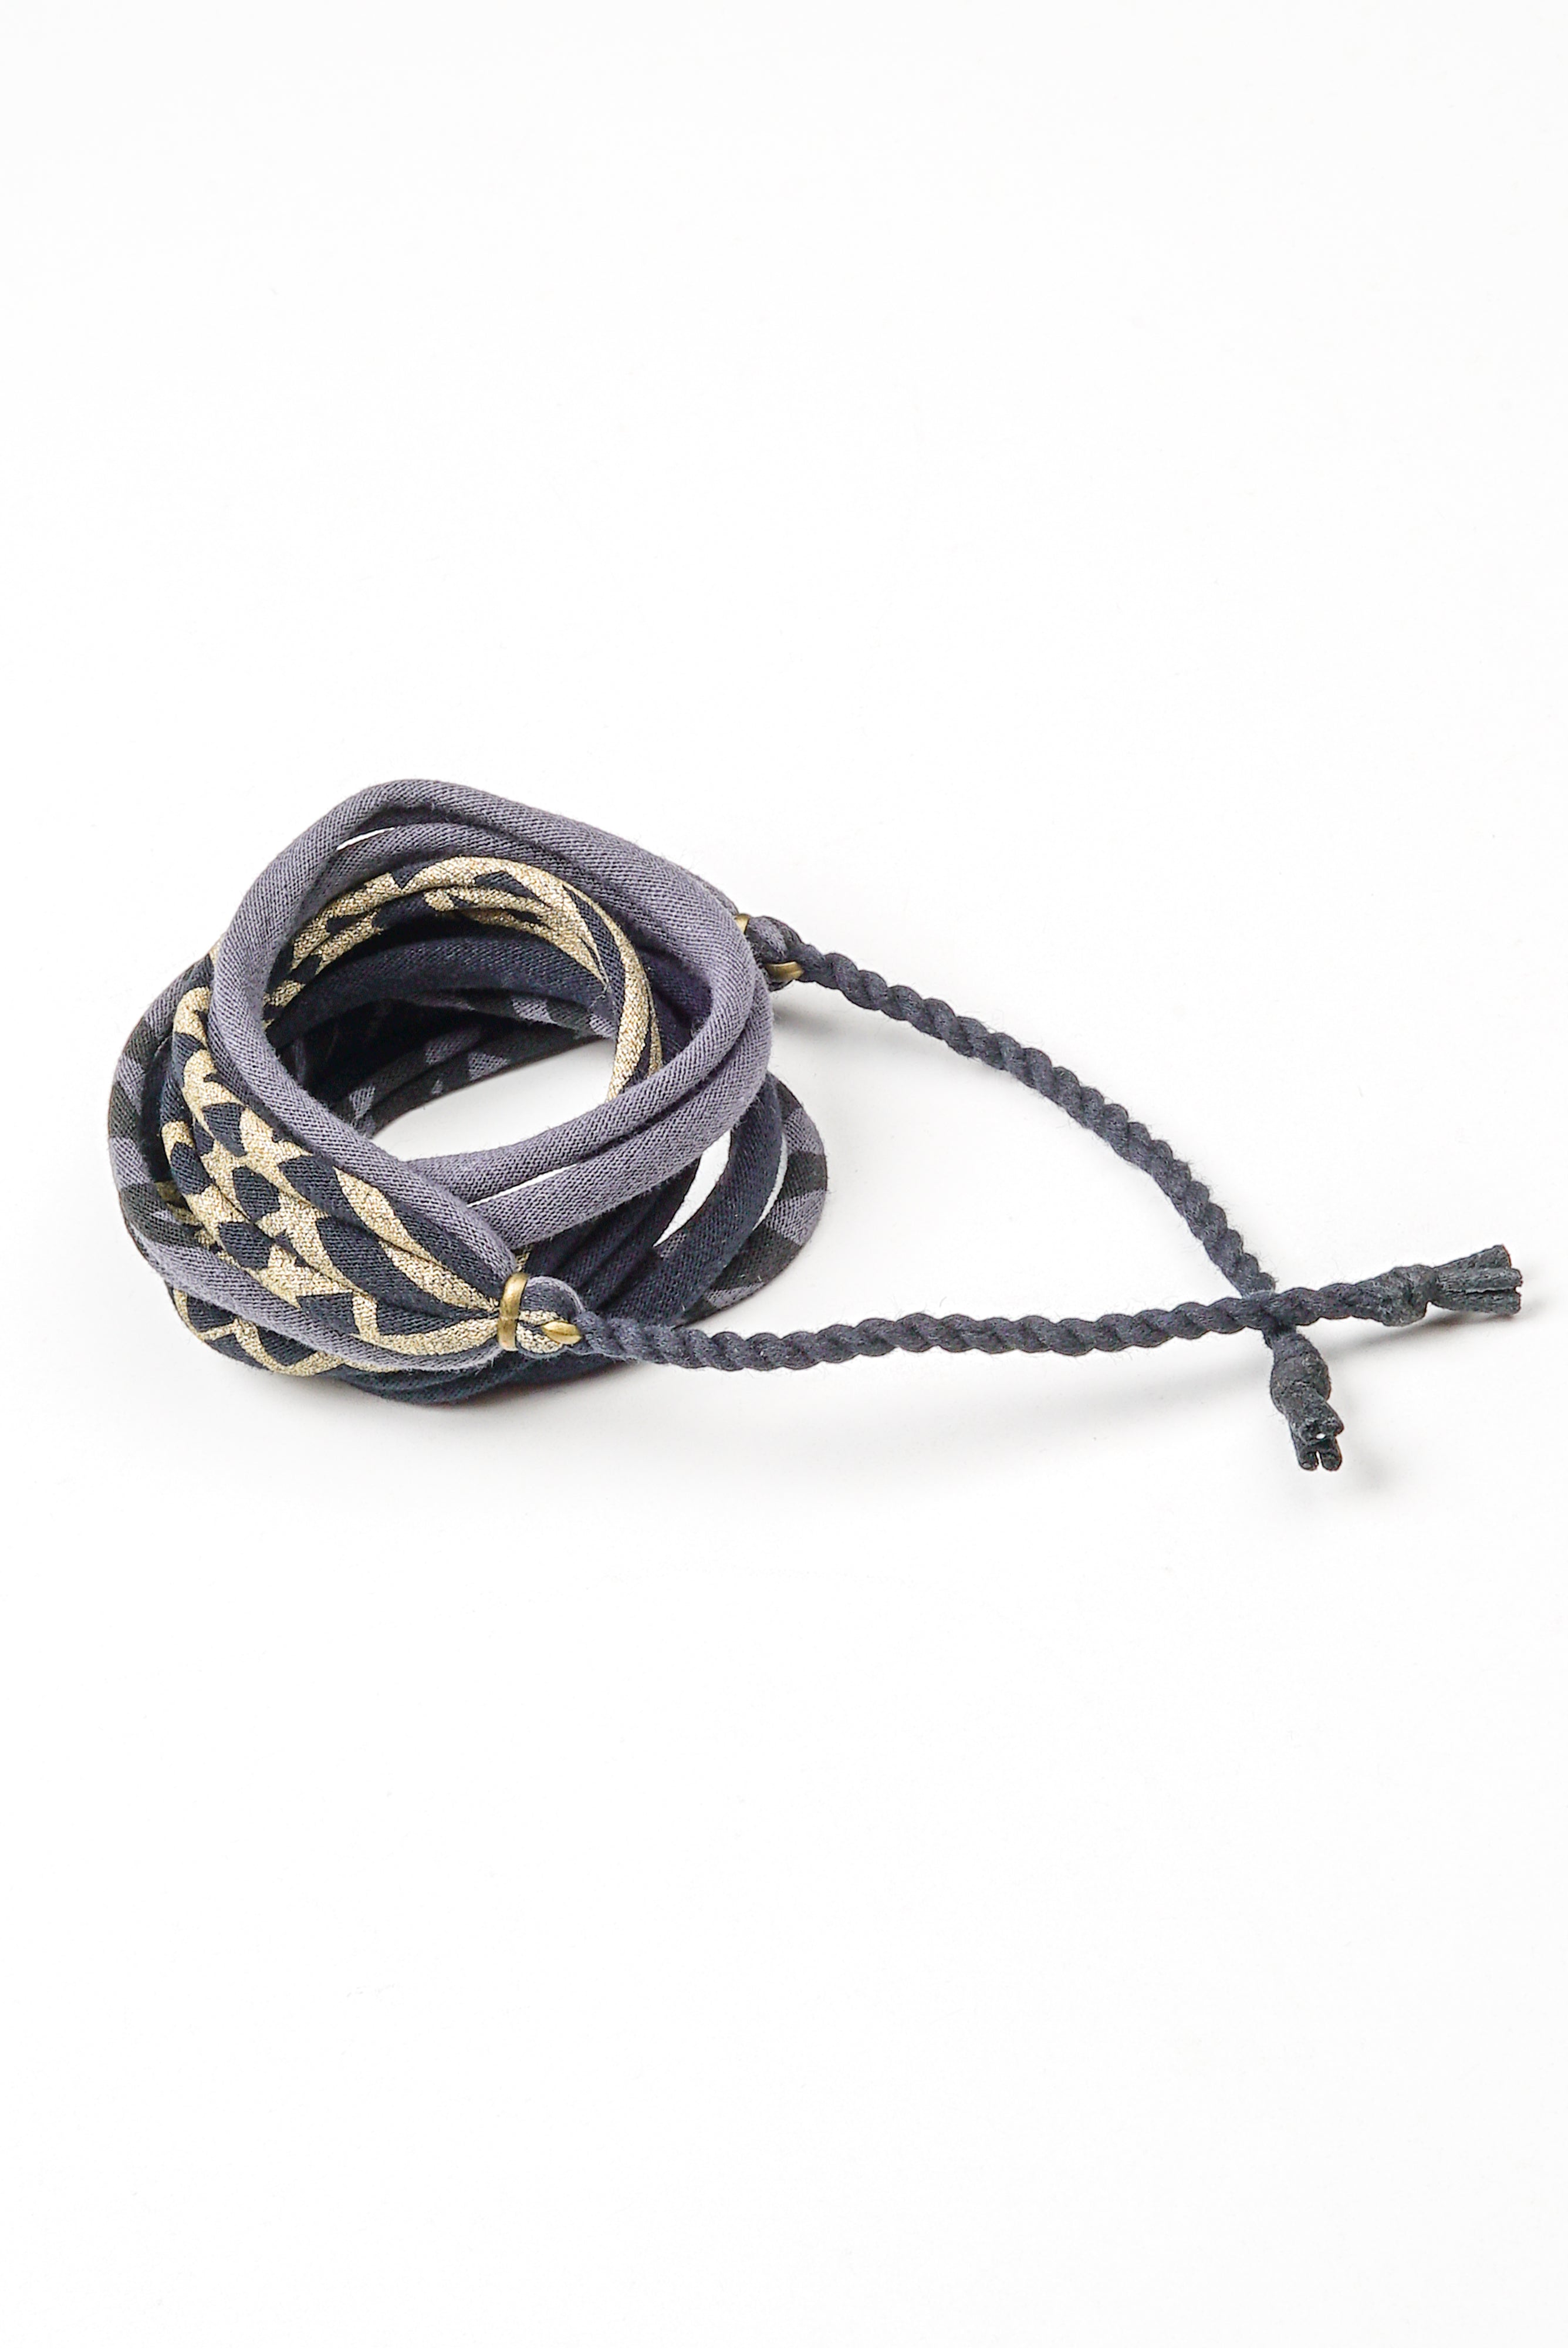 Necklush Wrap Bracelet / Grey & Black / unisex Men's Women's Standard